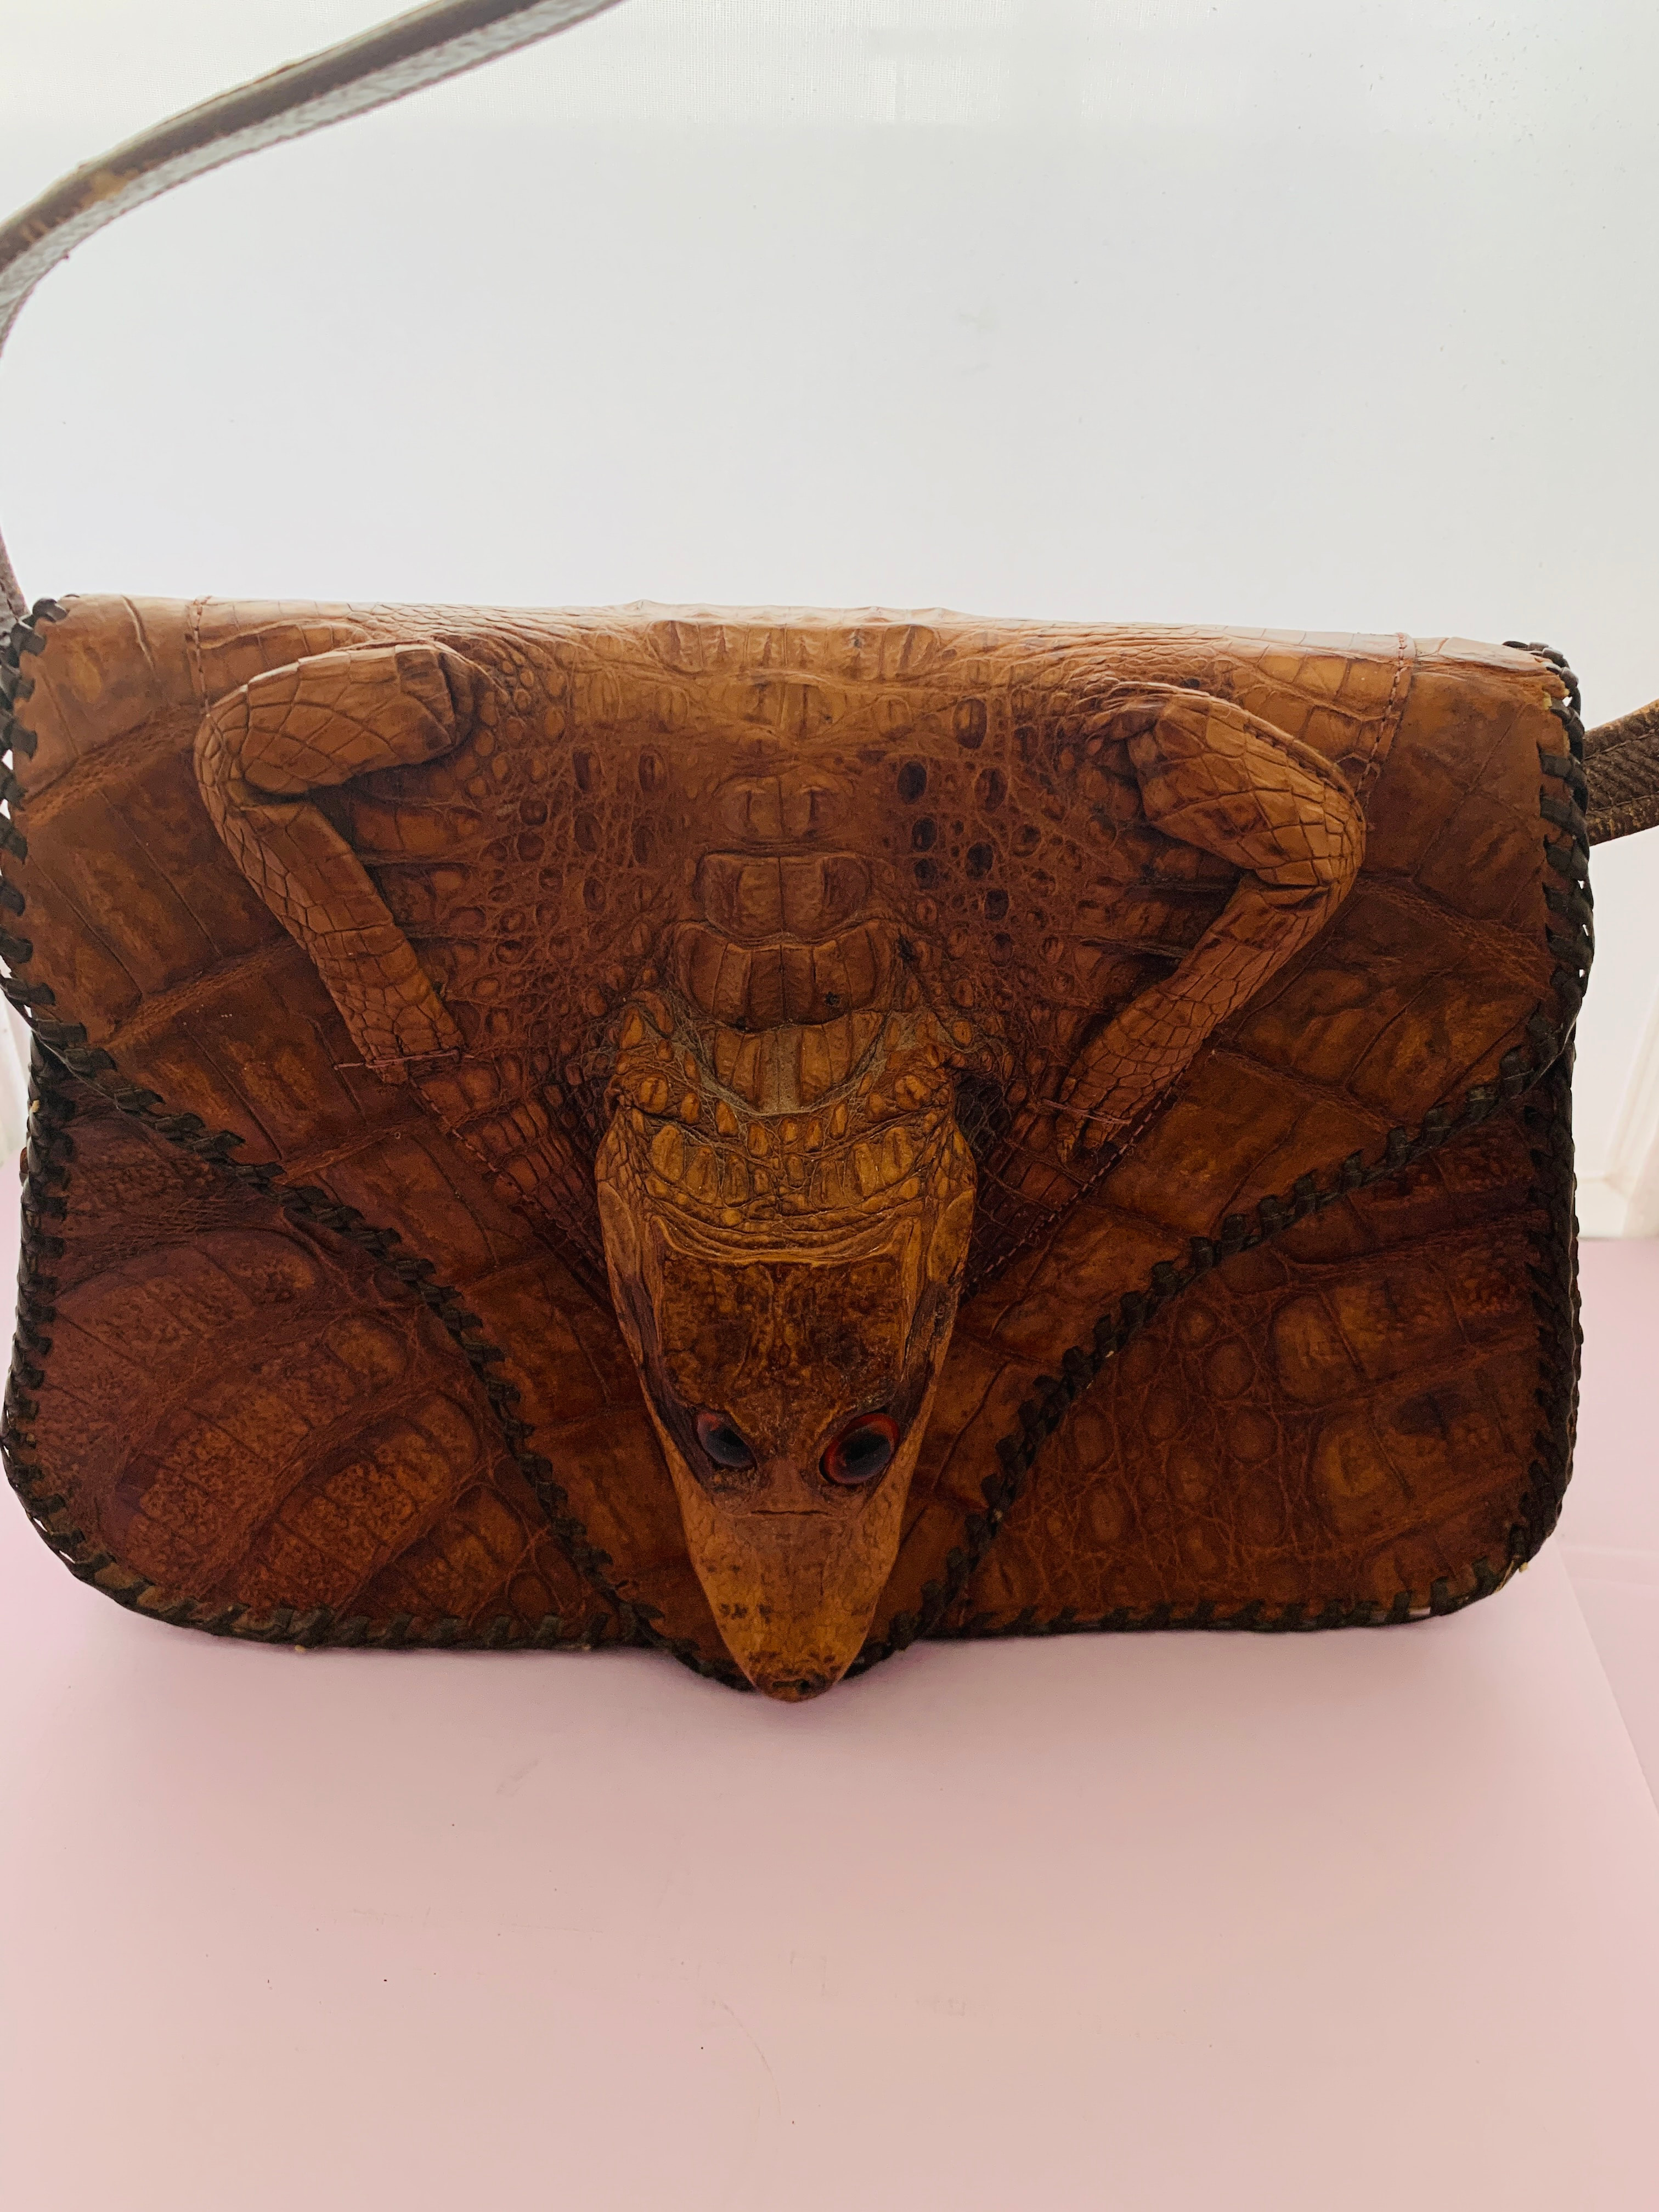 Vintage Alligator Handbag | eBay